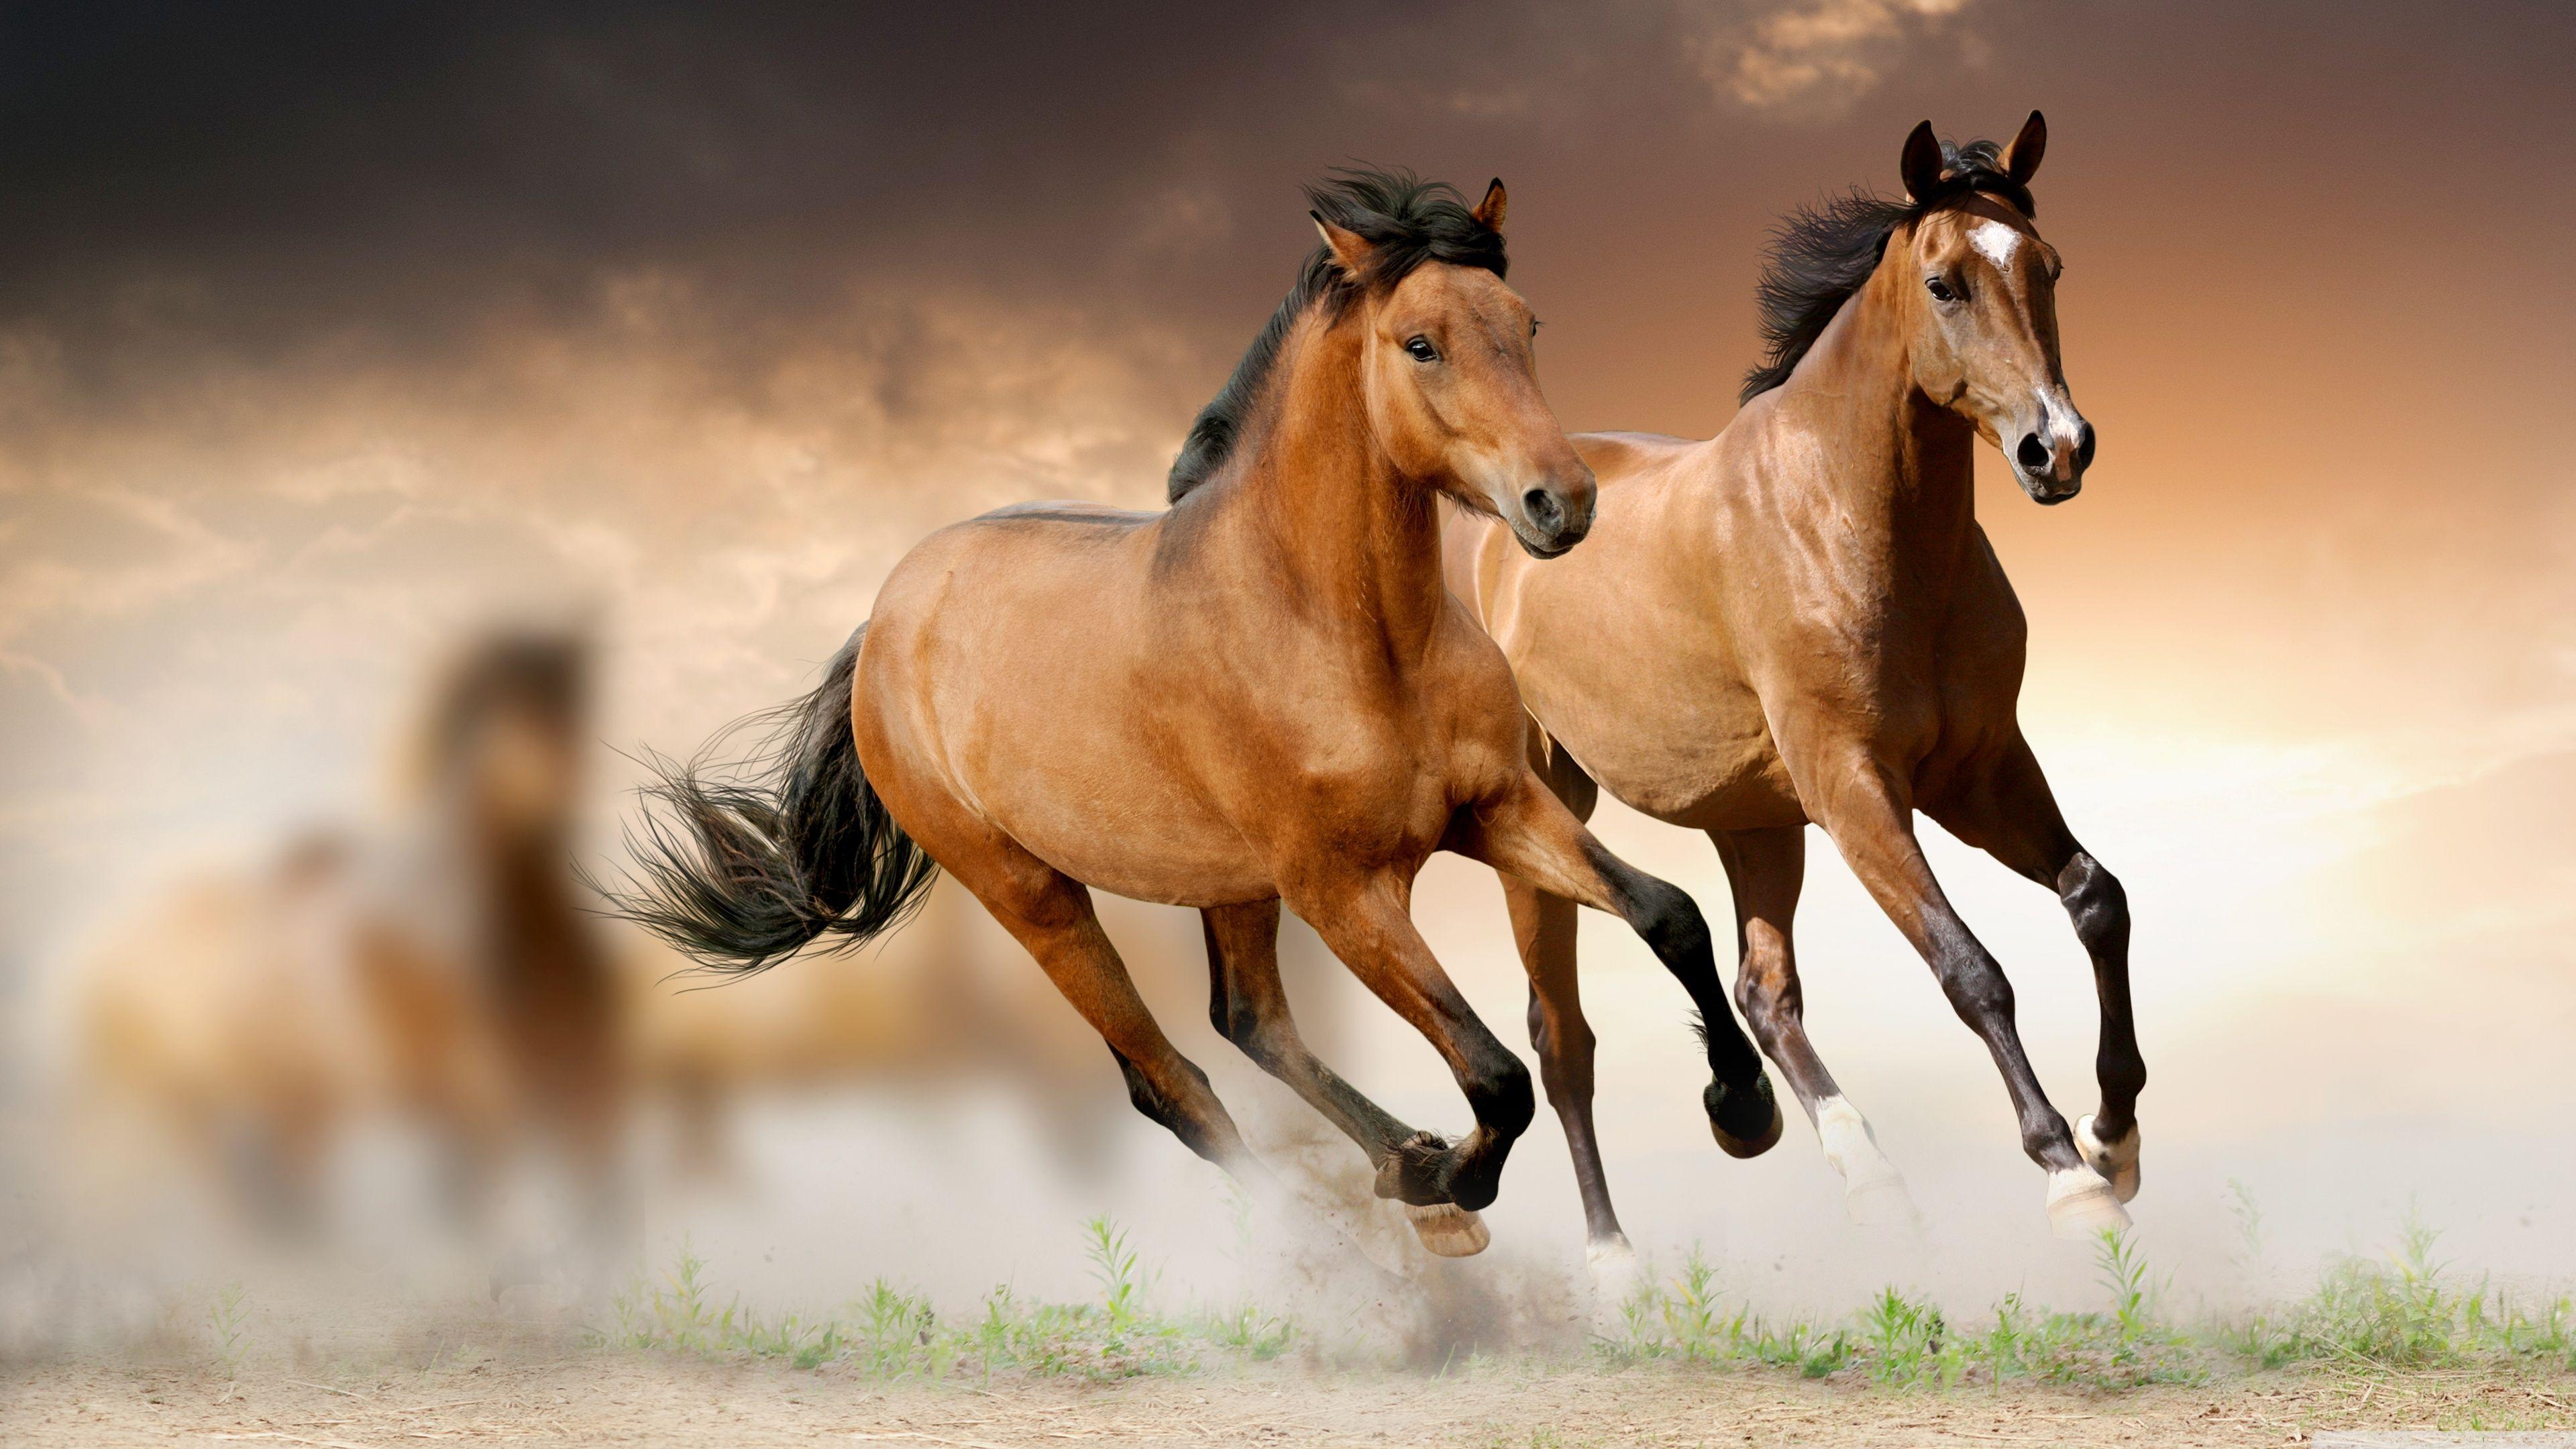 Horses Running Ultra HD Desktop Background Wallpaper for 4K UHD TV, Tablet